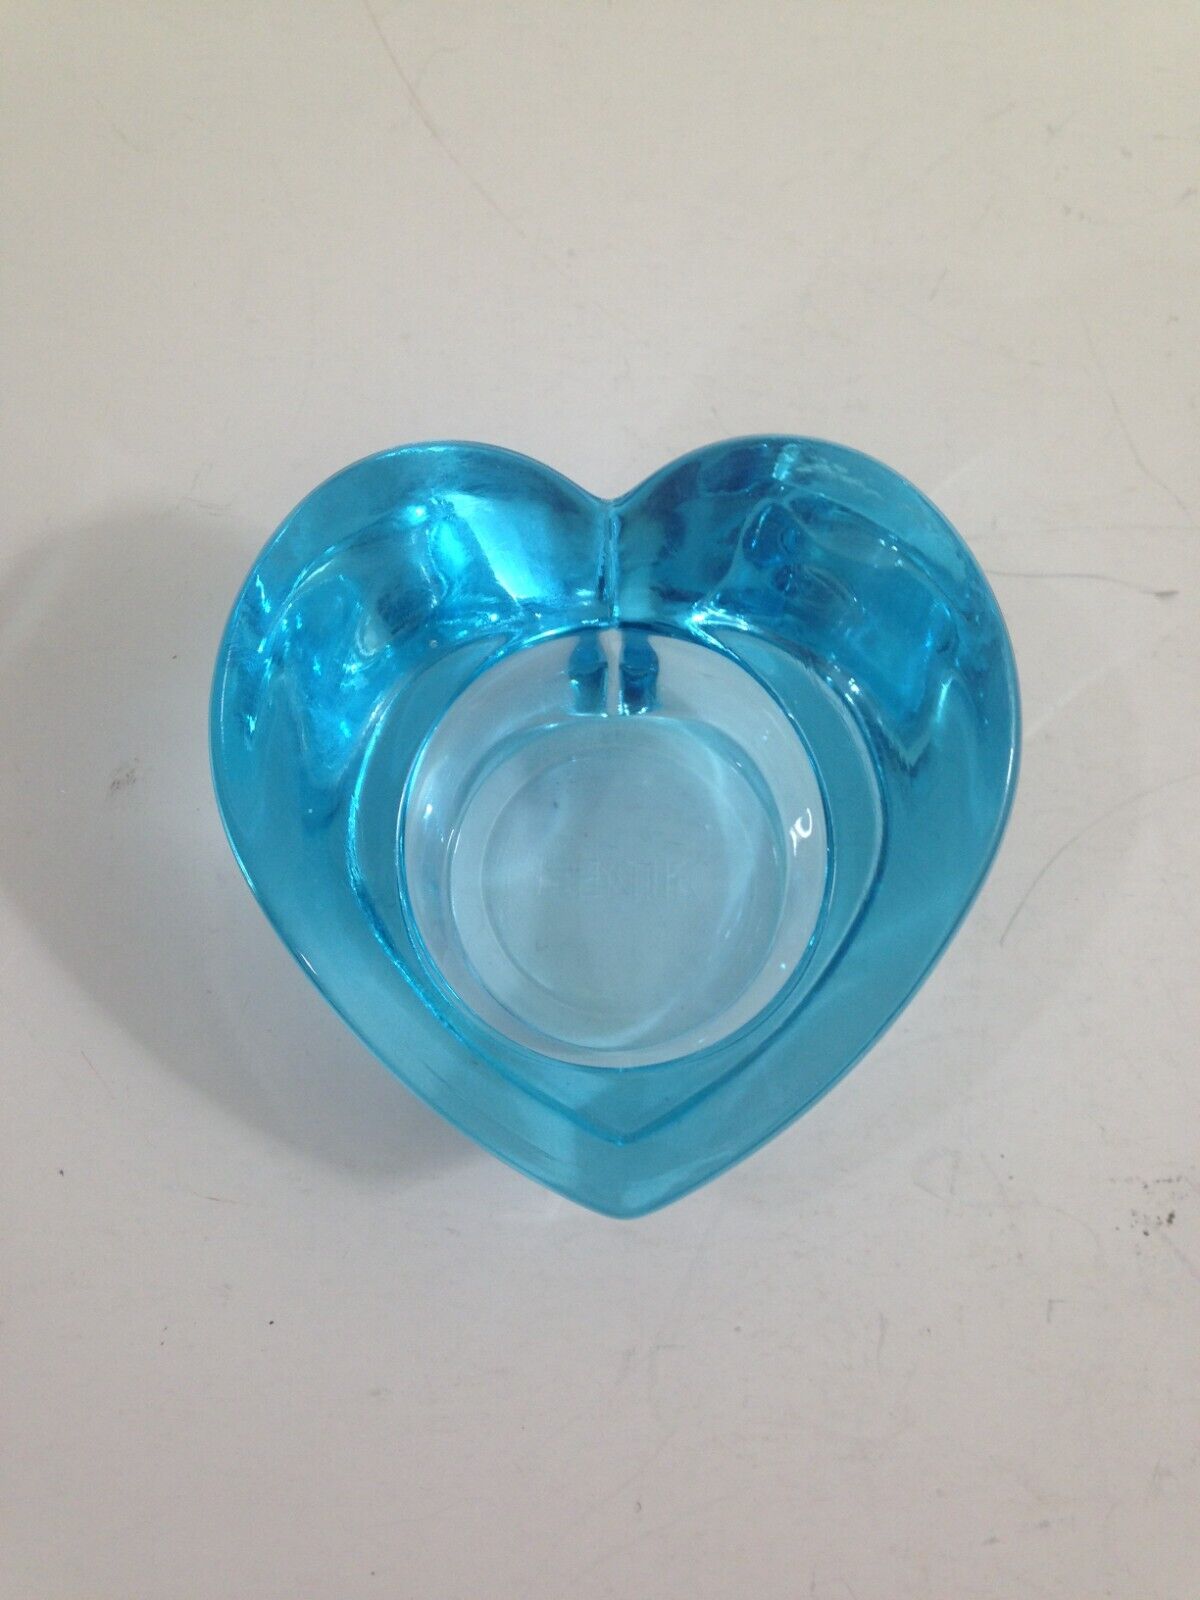 PENTIK candle holder heart shape blue glass heavy beautiful mcm retro